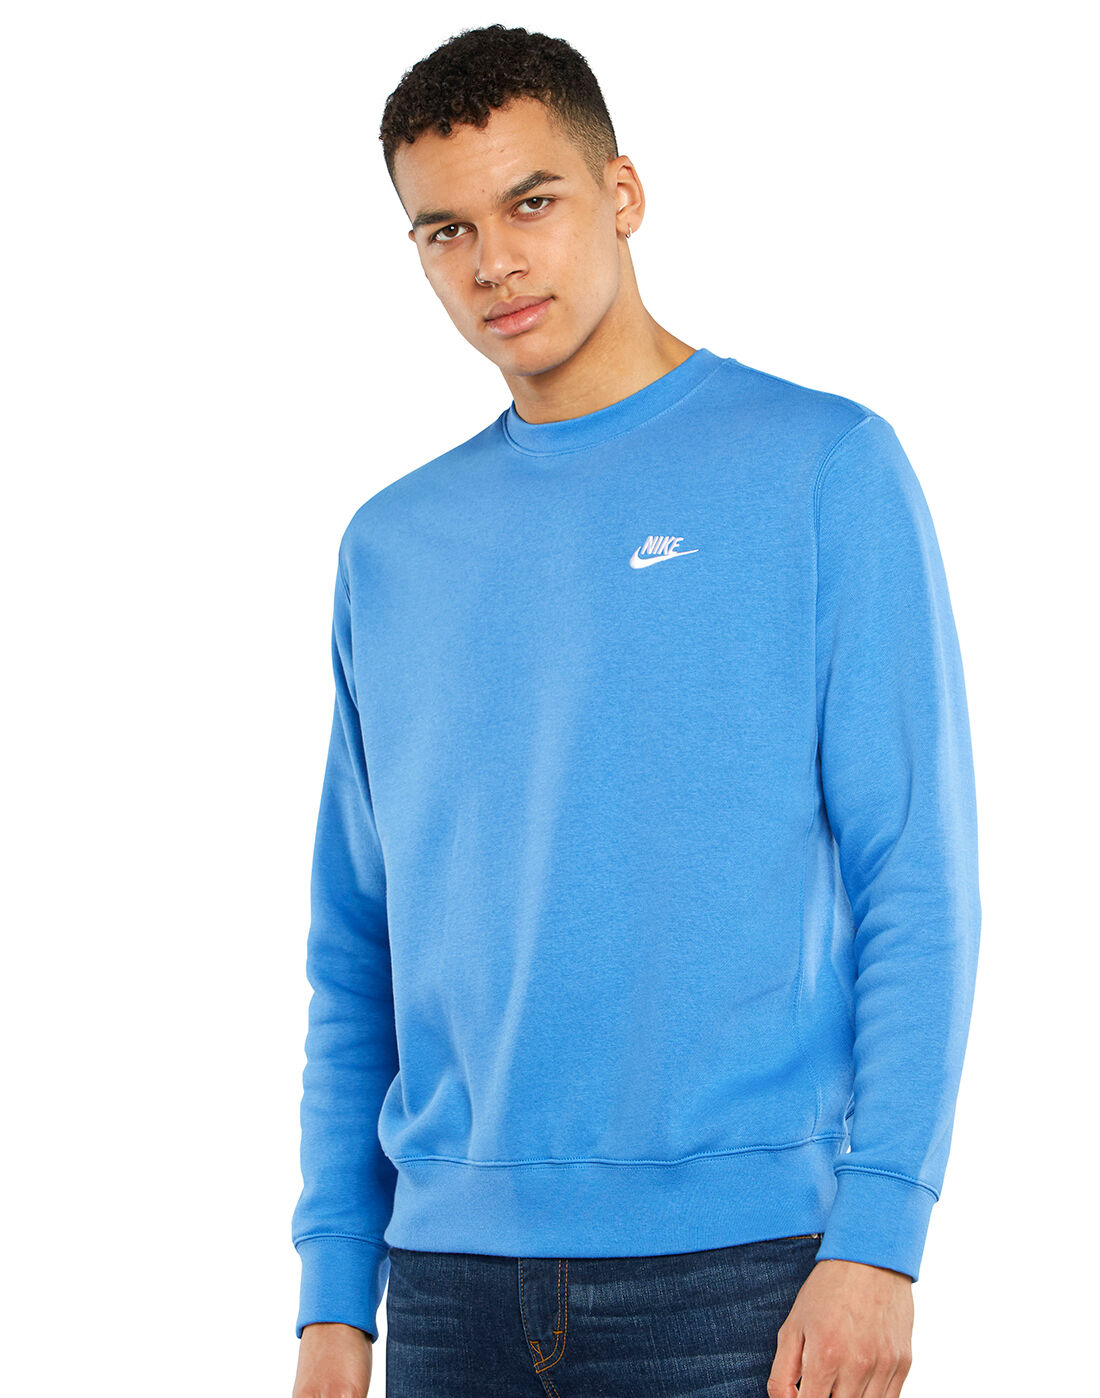 nike blue sweatshirt